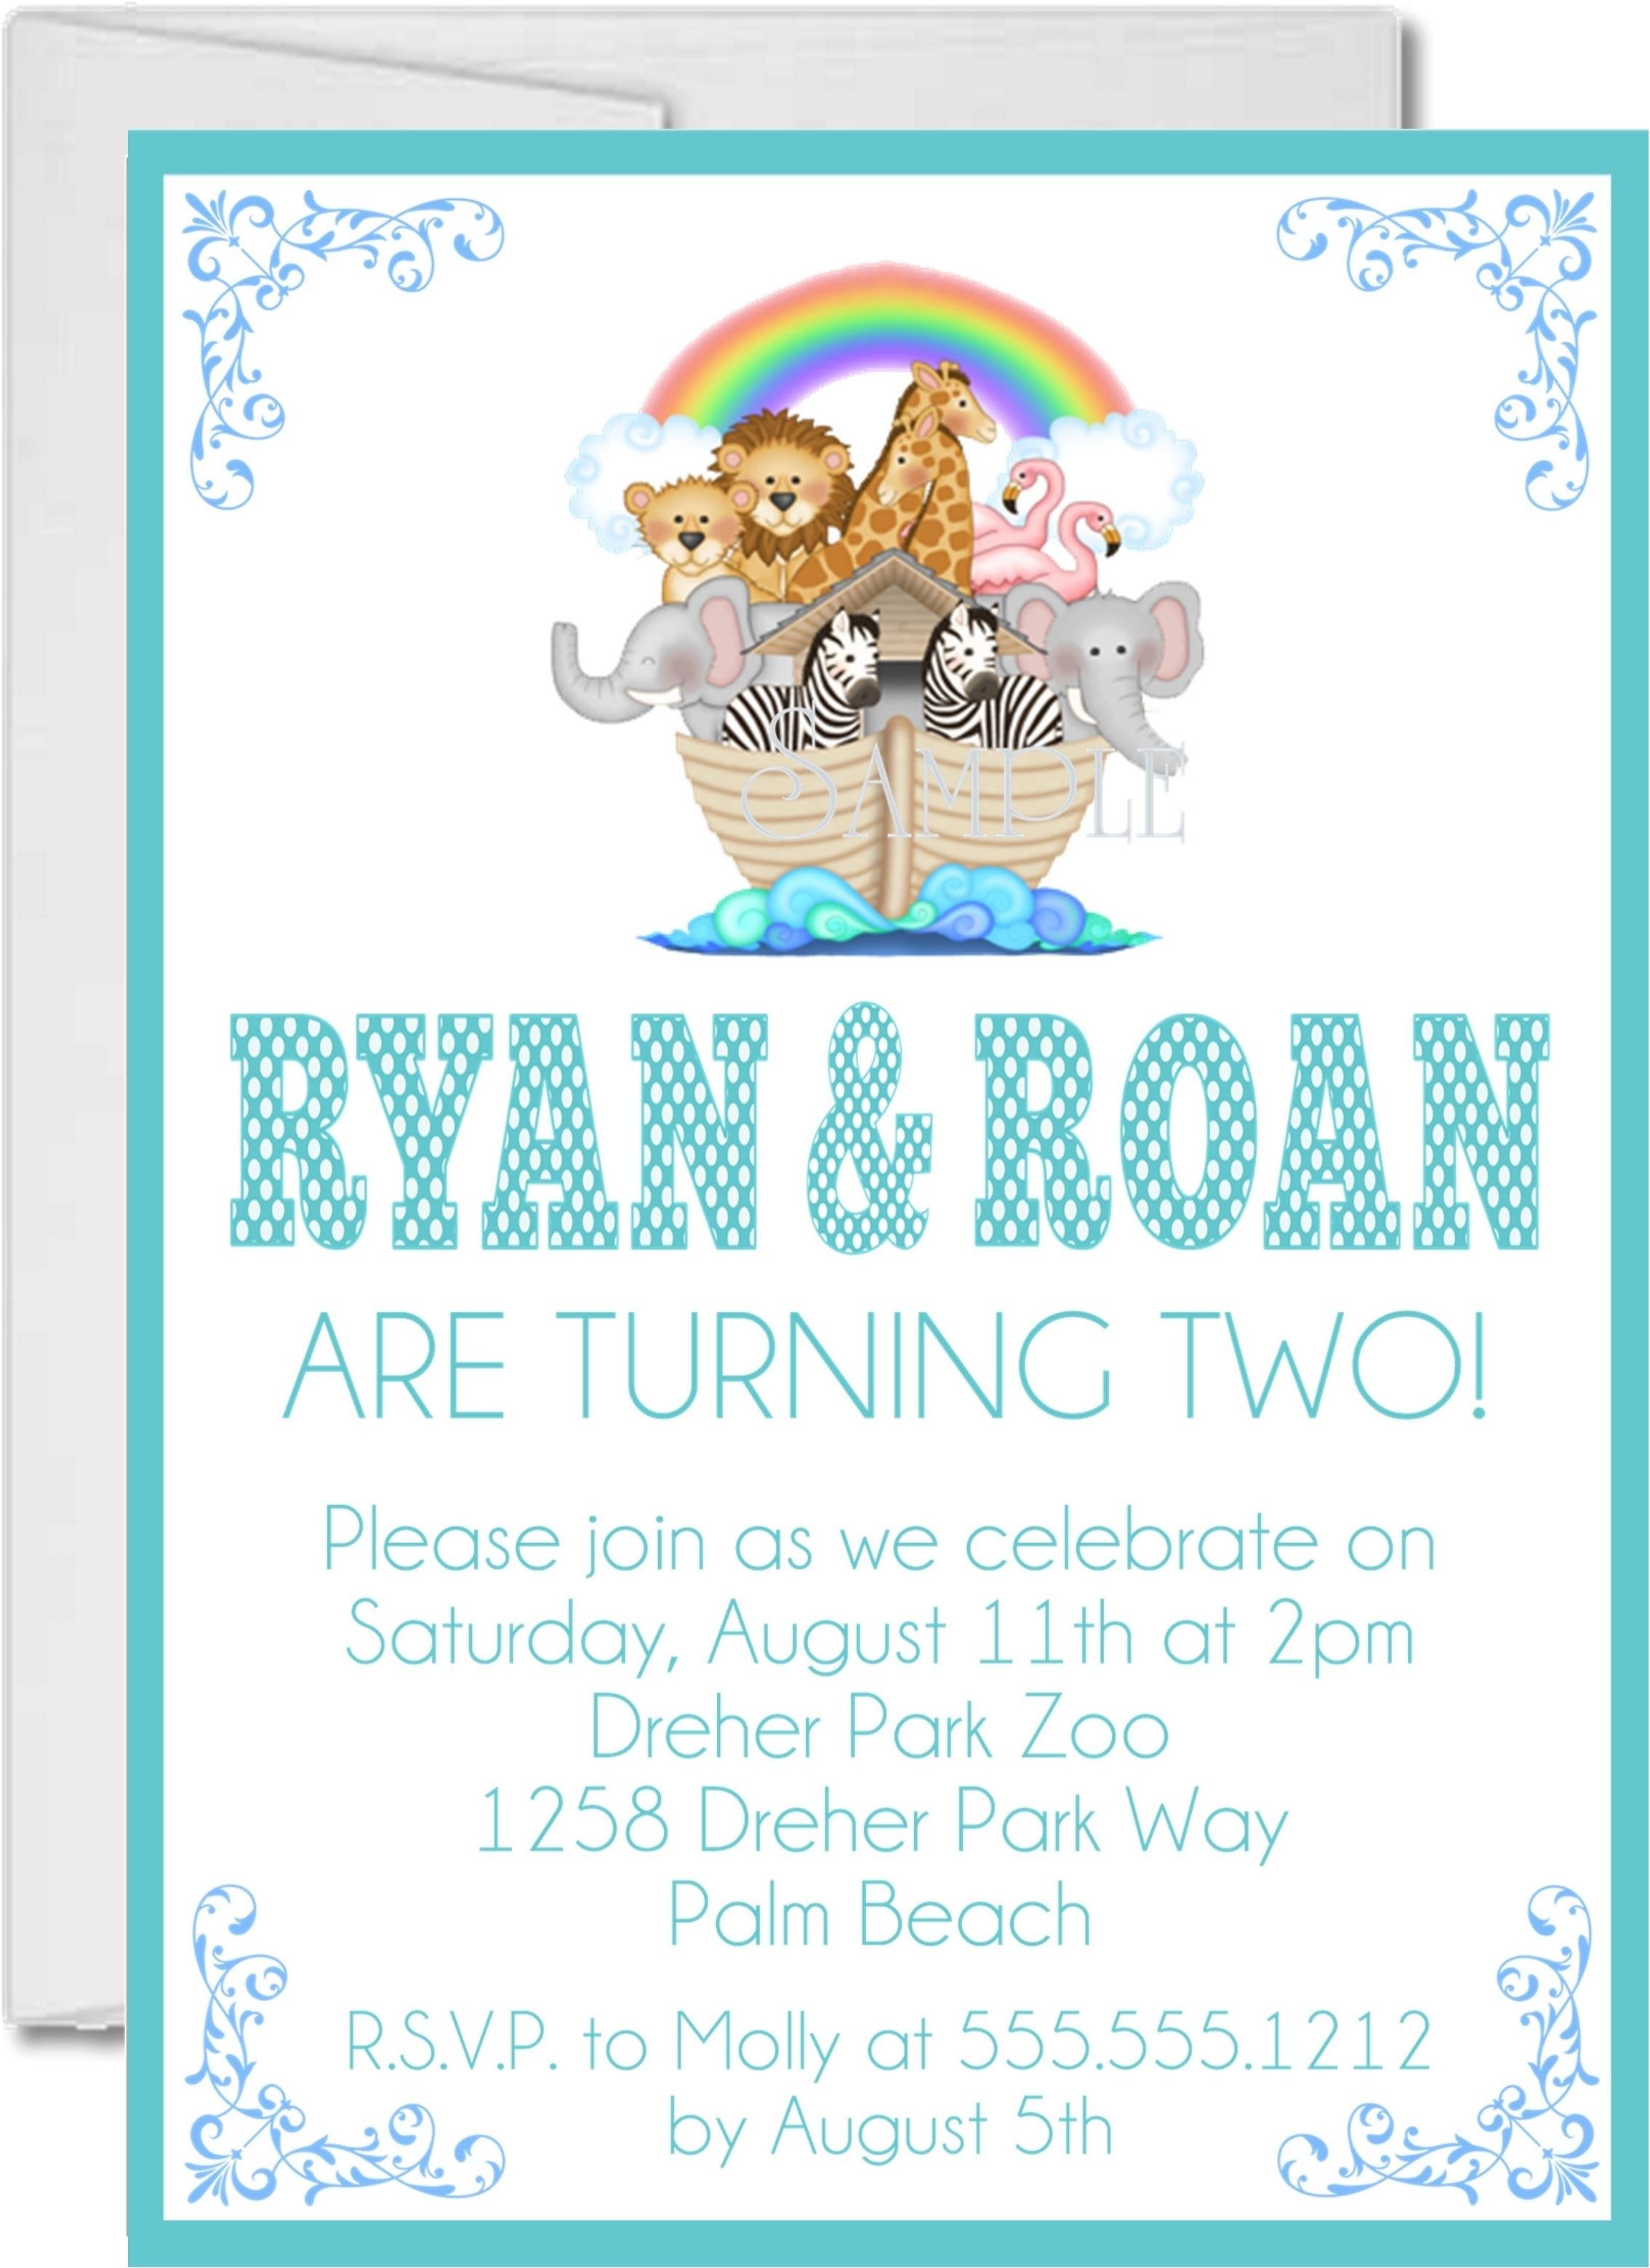 Twins Noah's Ark Birthday Party Invitations